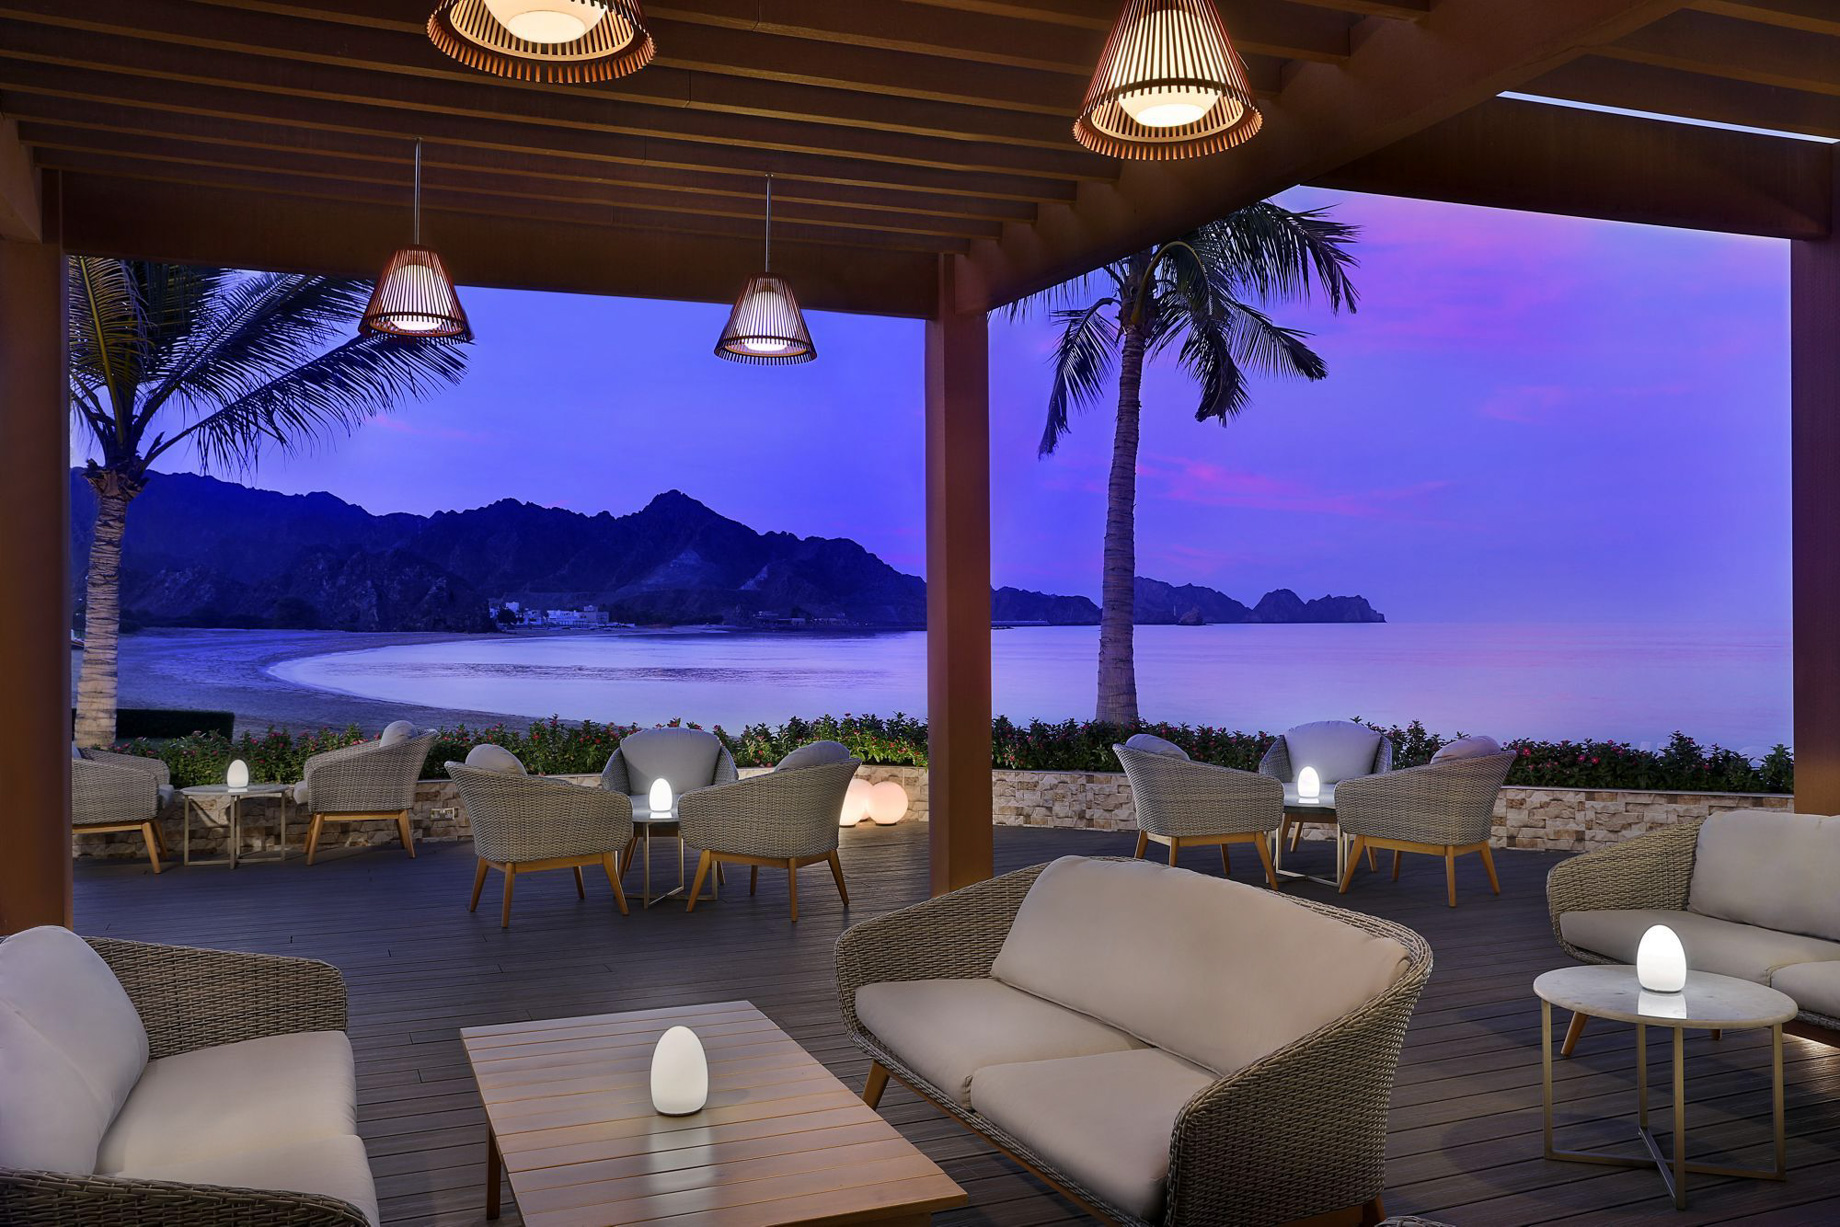 Al Bustan Palace, A Ritz-Carlton Hotel - Muscat, Oman - Beach Pavilion Bar & Grill Terrace Night Beach View